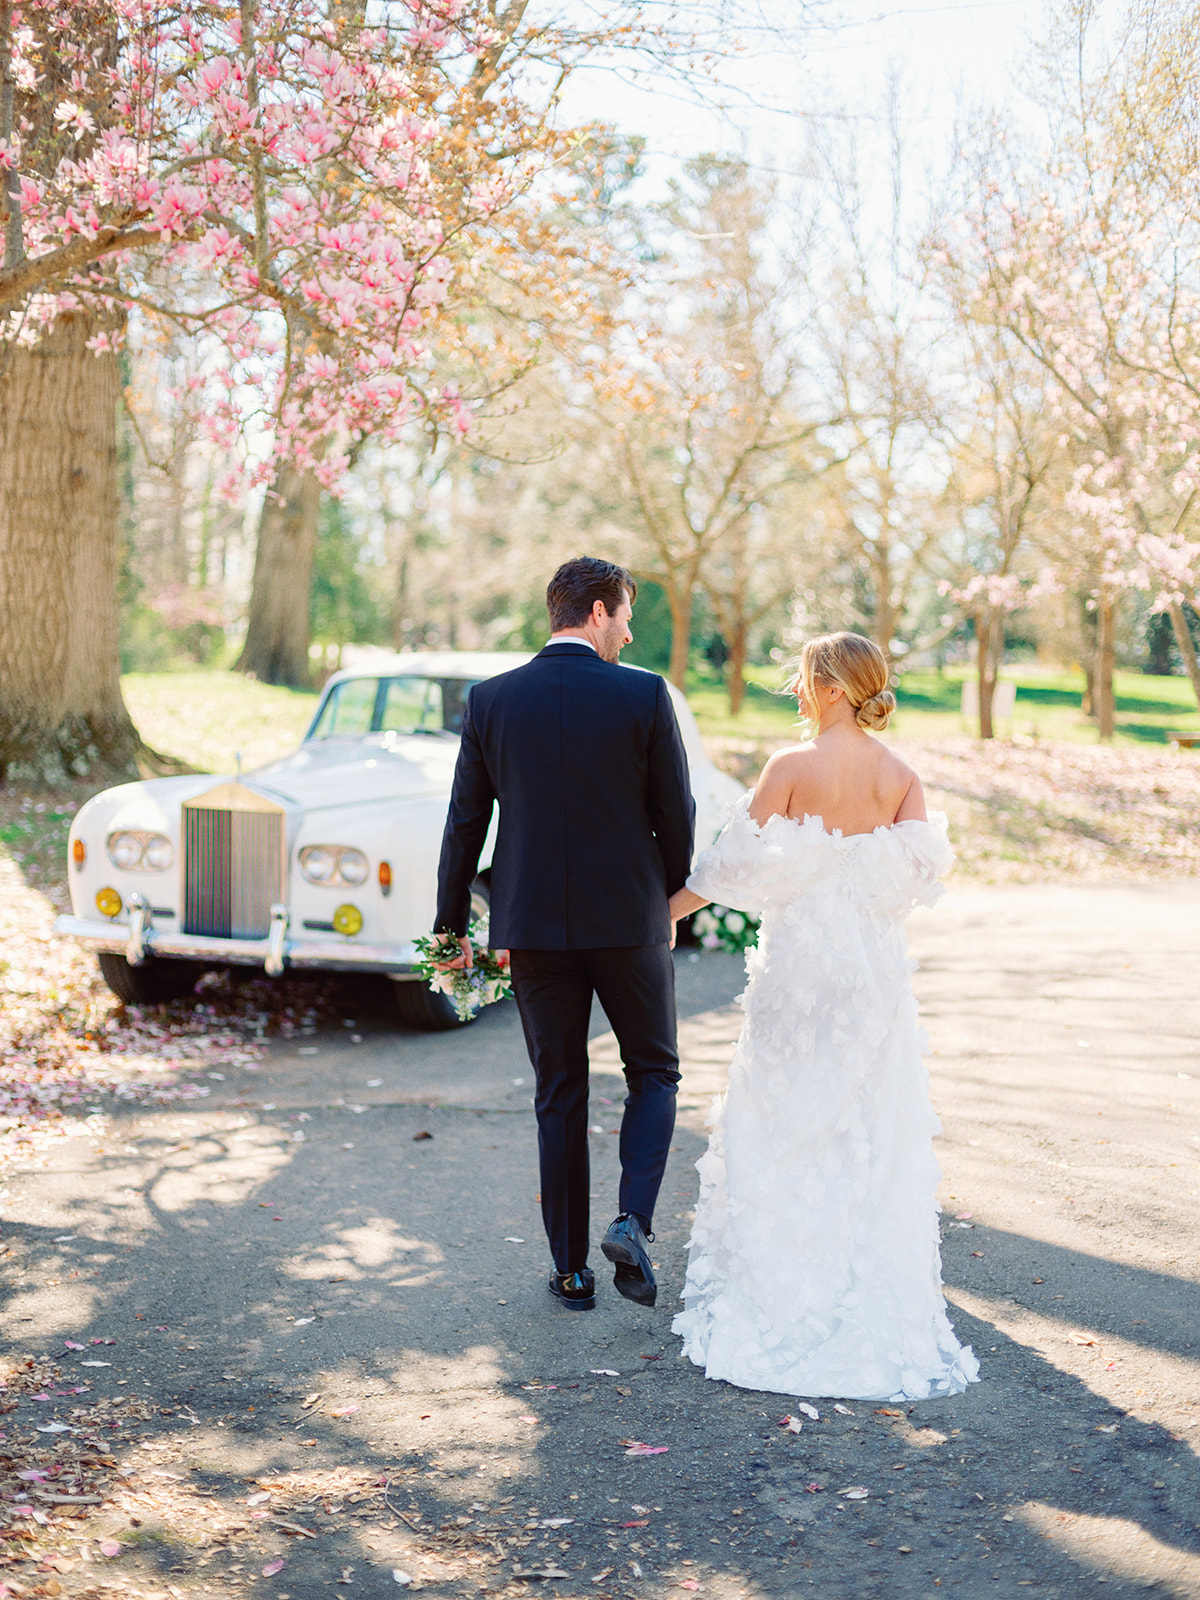 Couple walking away from classic rolls-royce car